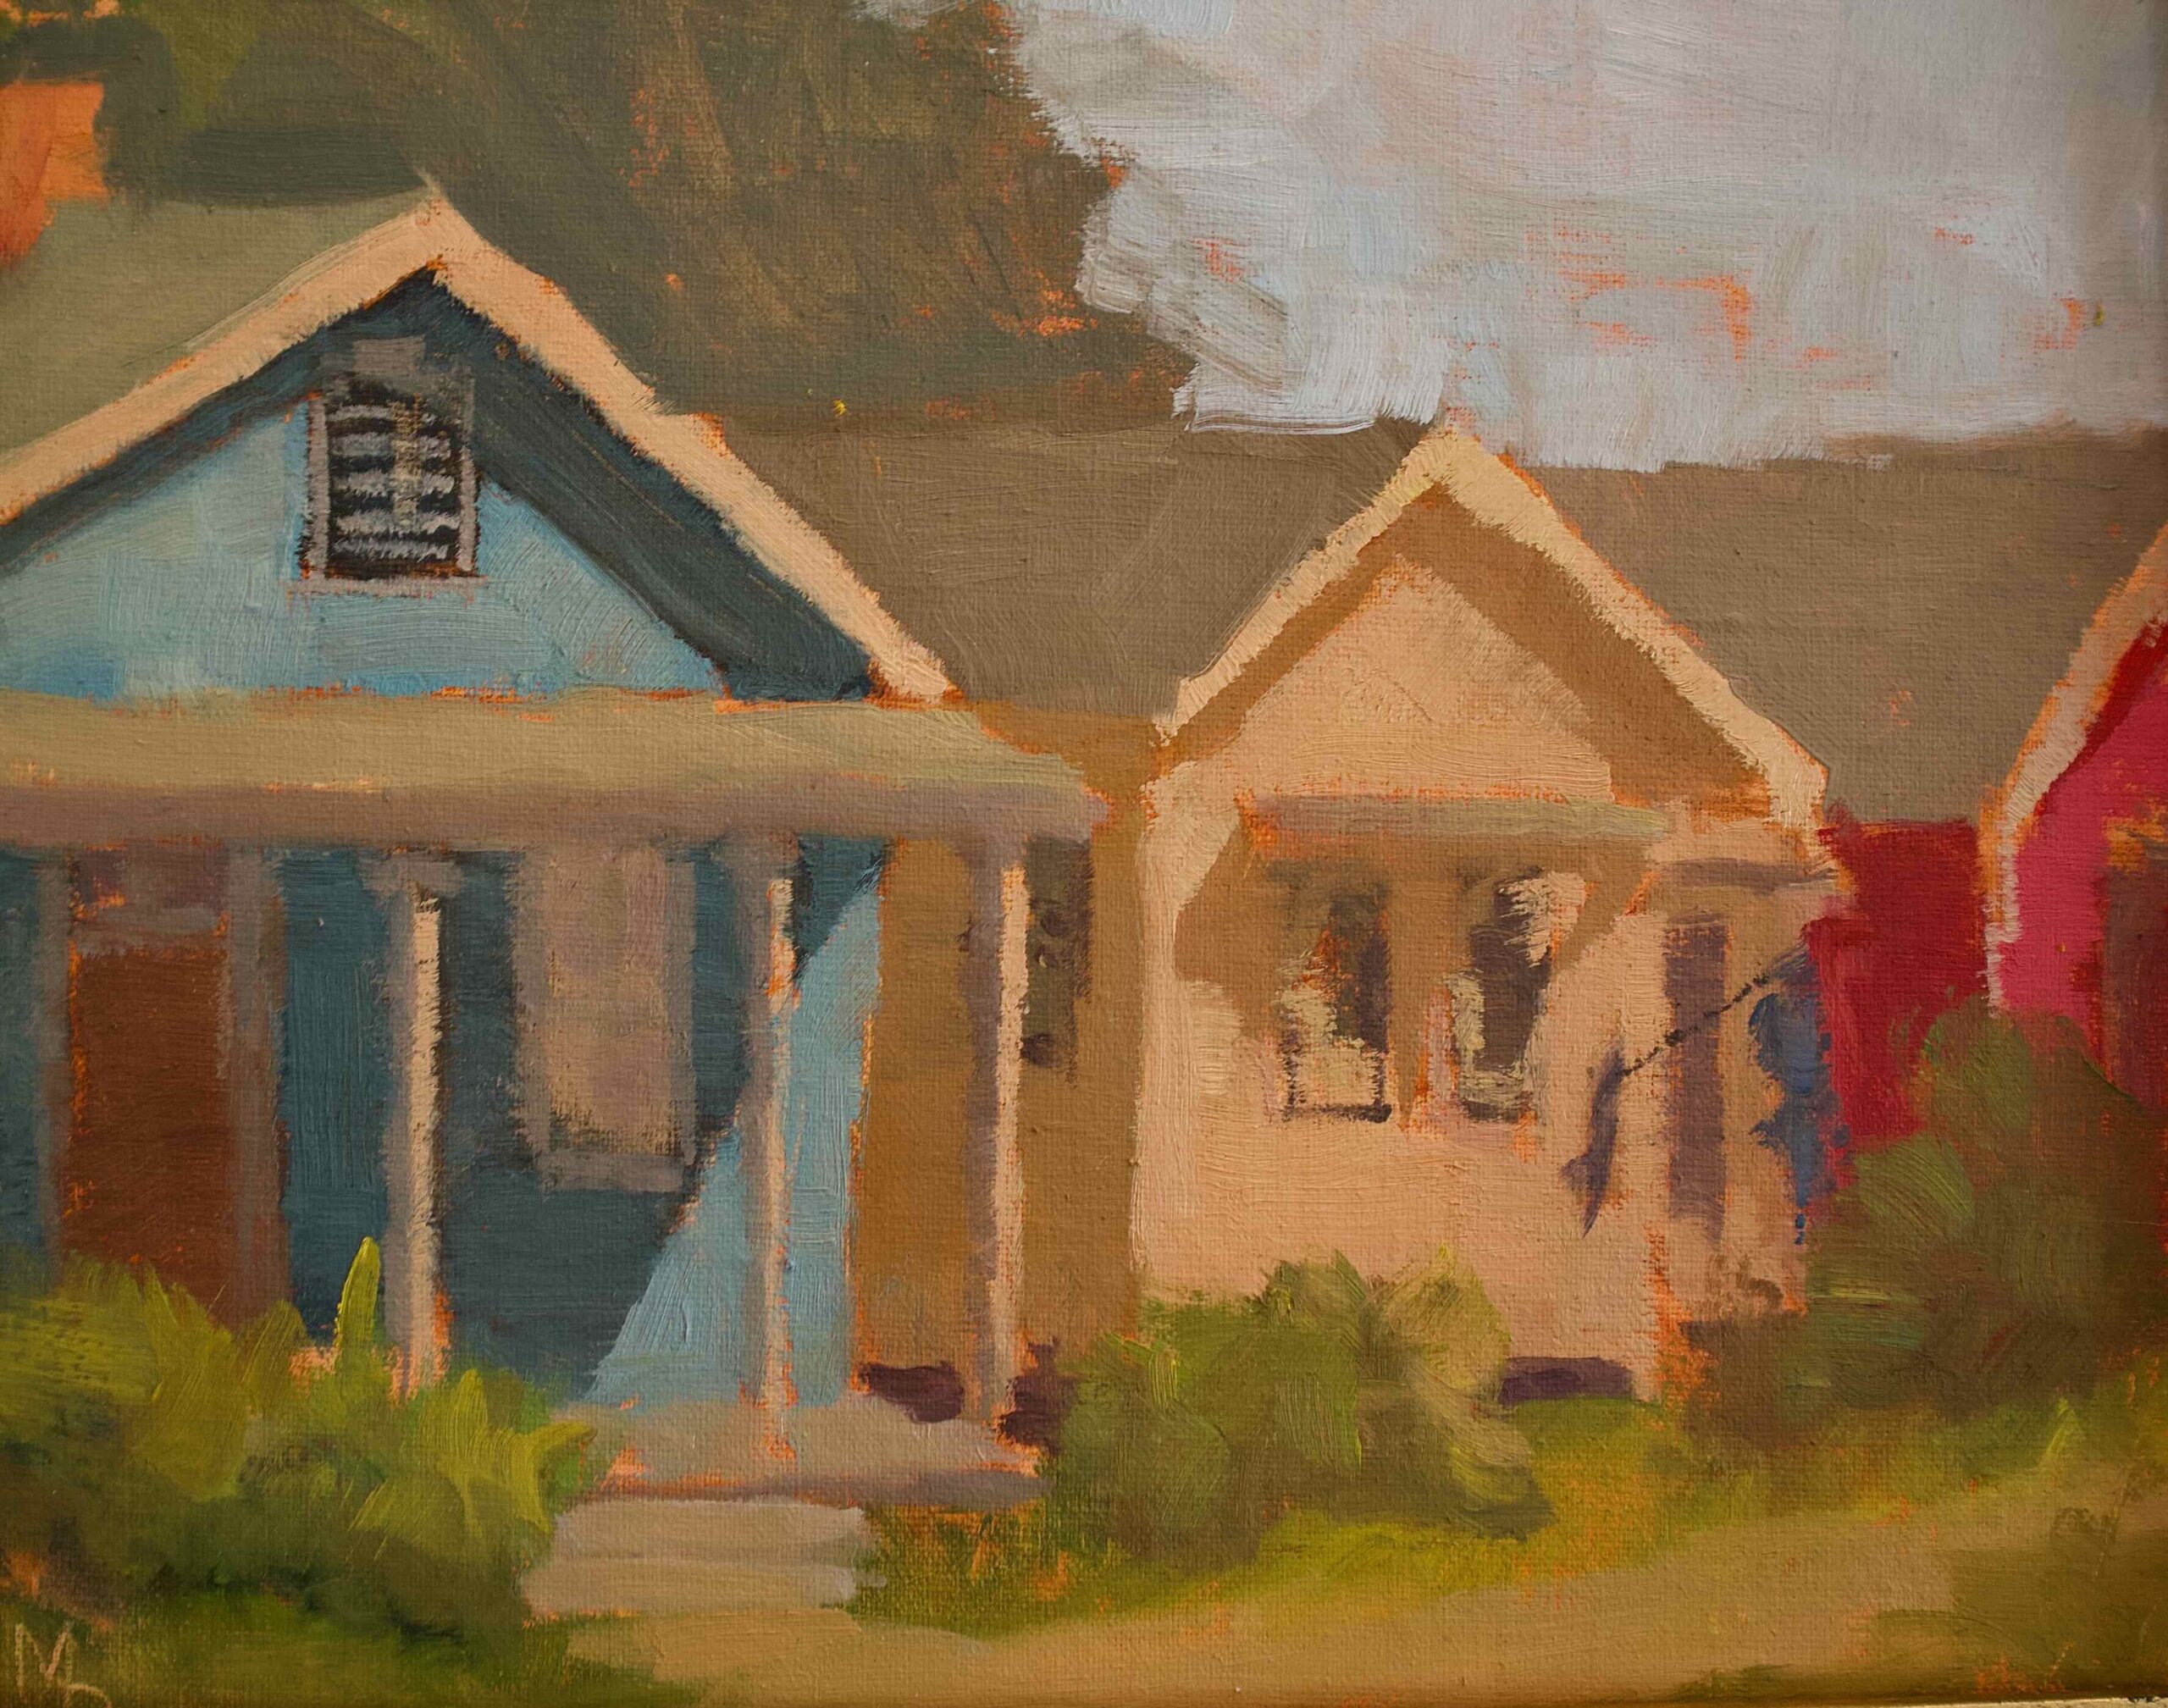 "Little Houses" by Marylyn Daniel